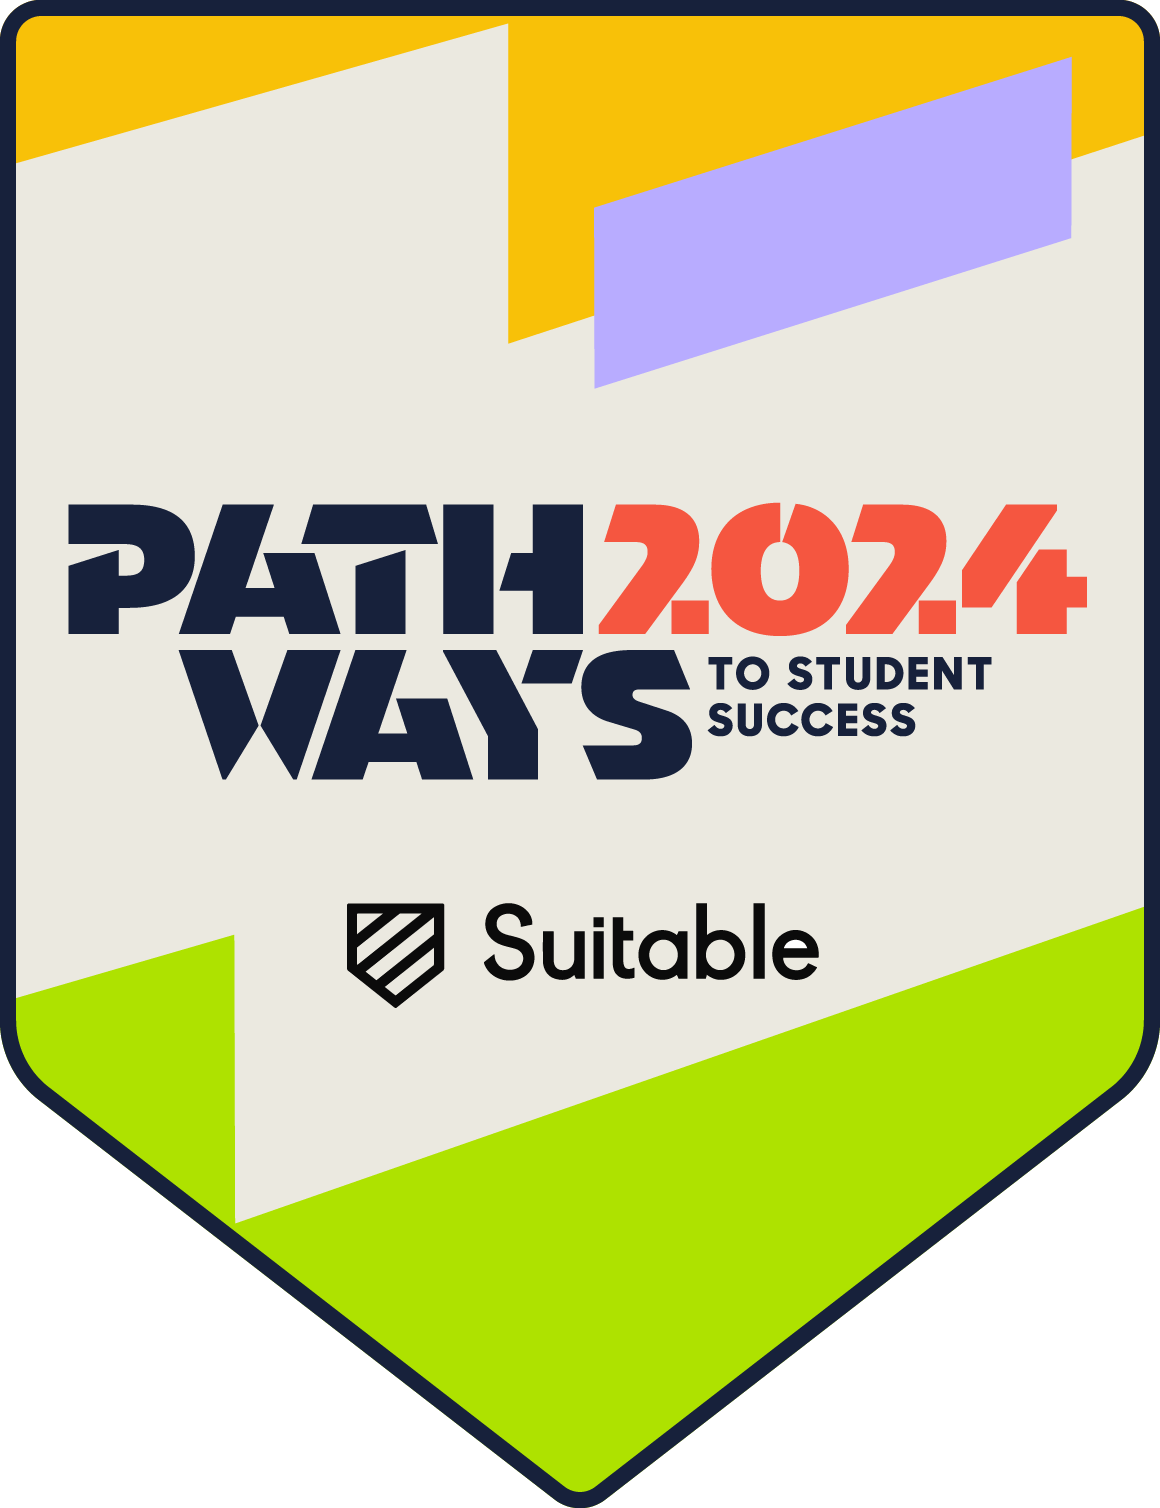 PathwaysBadge - Most Creative Marketing Strategy - Marketing & Promotion@4x